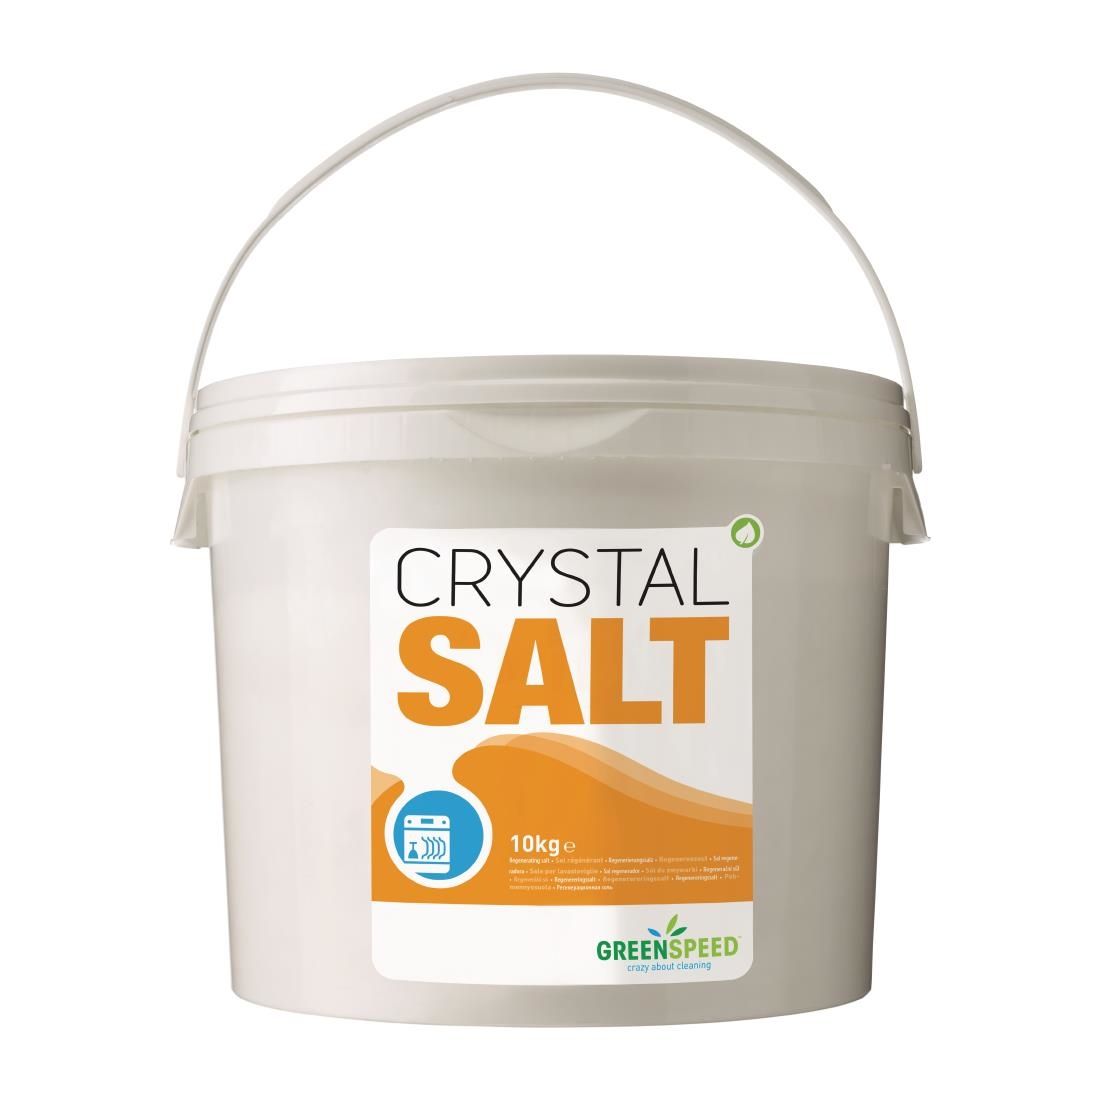 Greenspeed Dishwasher Salt 10kg JD Catering Equipment Solutions Ltd